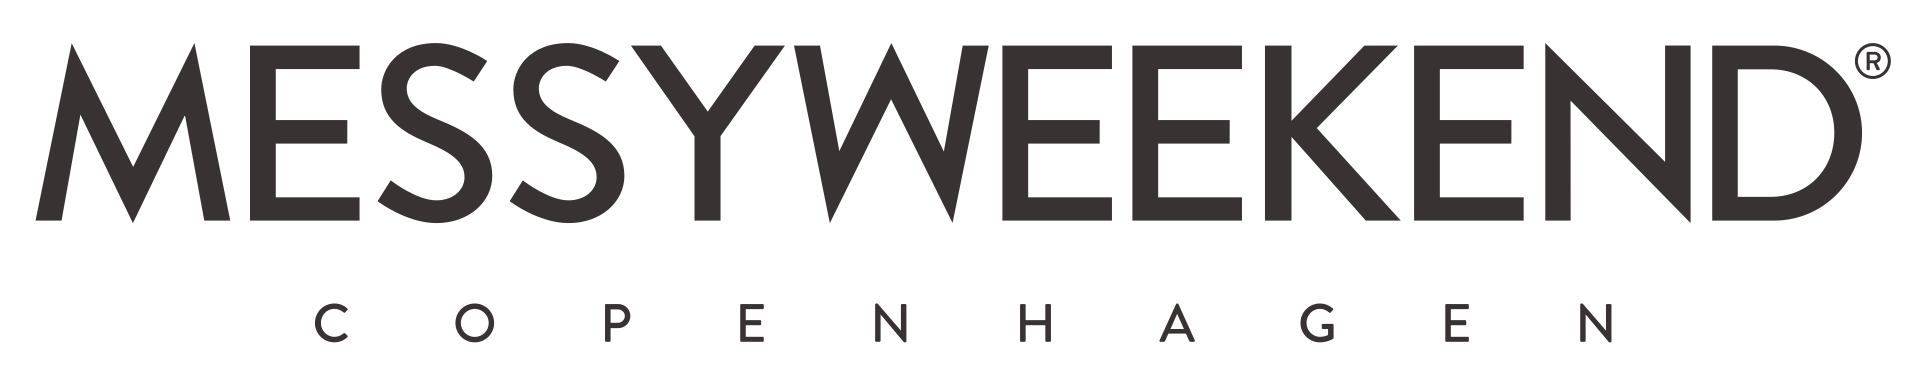 messyweekend-dk logo